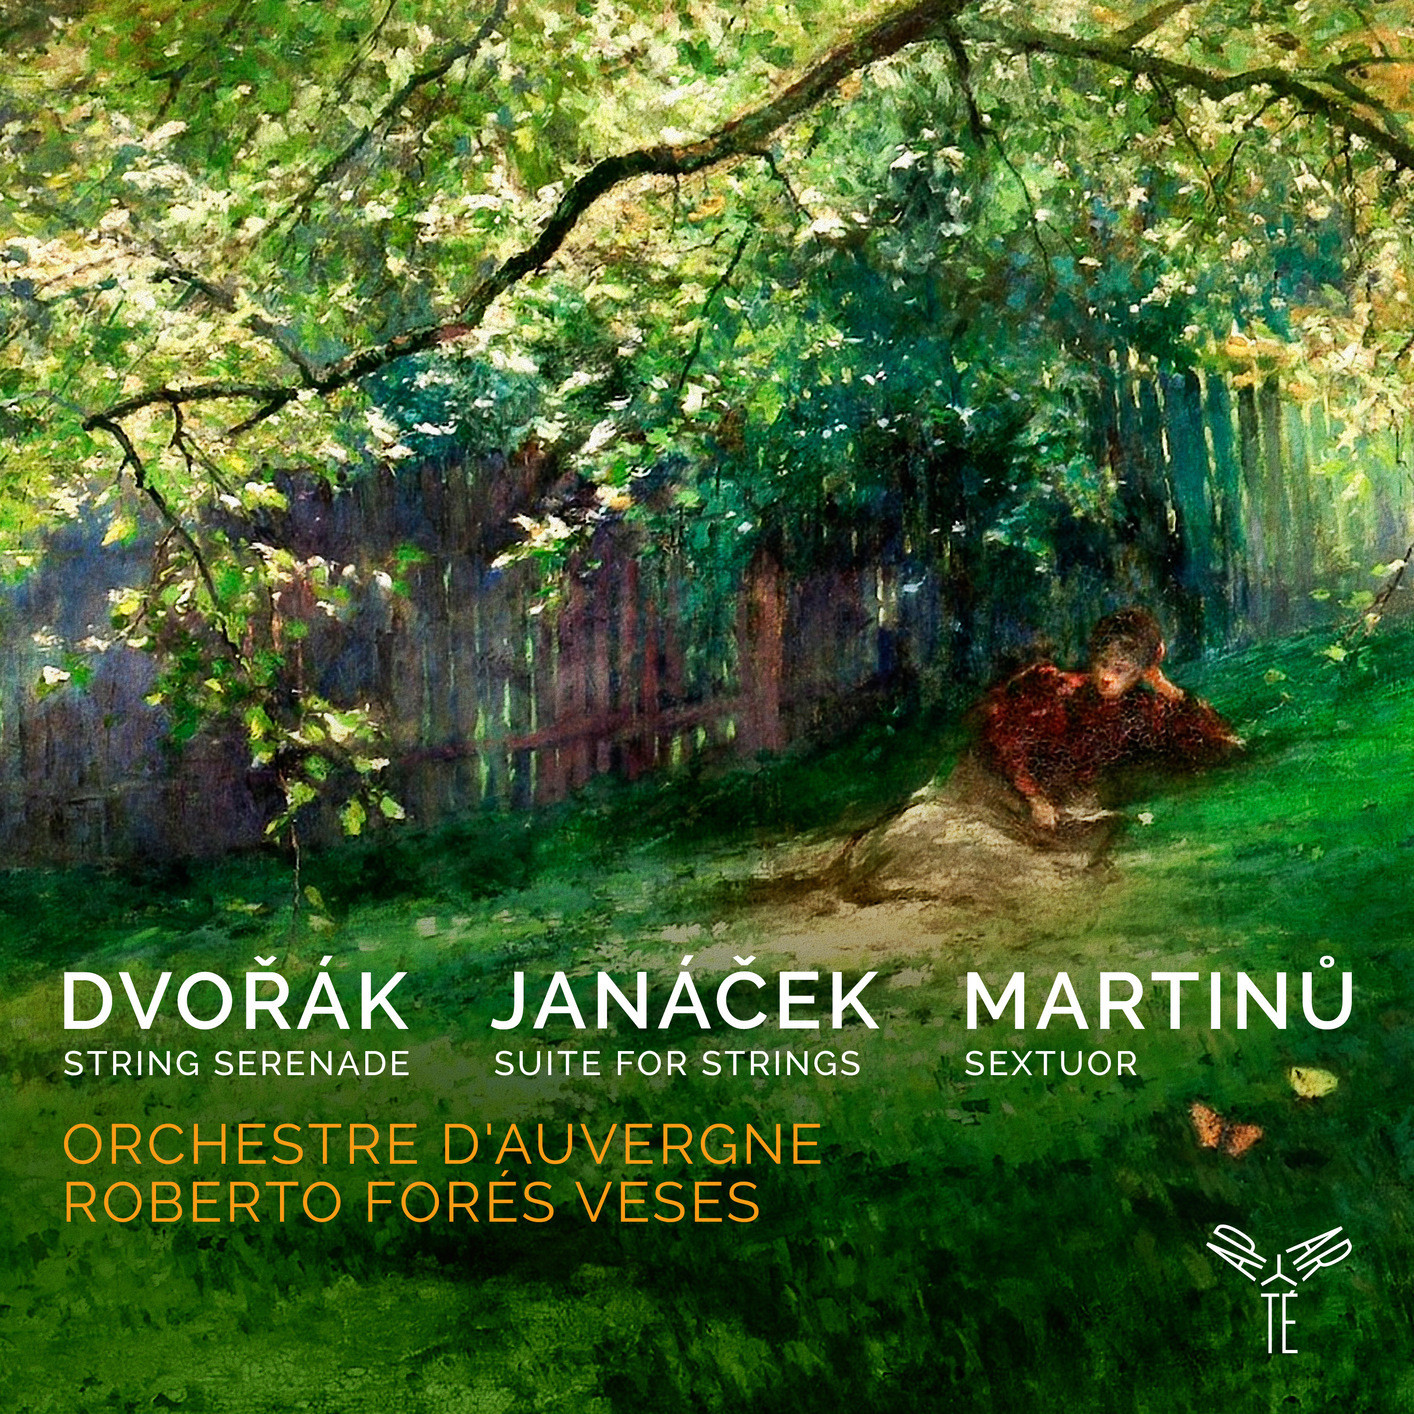 Orchestre d’Auvergne & Roberto Fores Veses - Dvorak, Janacek, Martinu: Works for Strings (2018) [FLAC 24bit/96kHz]